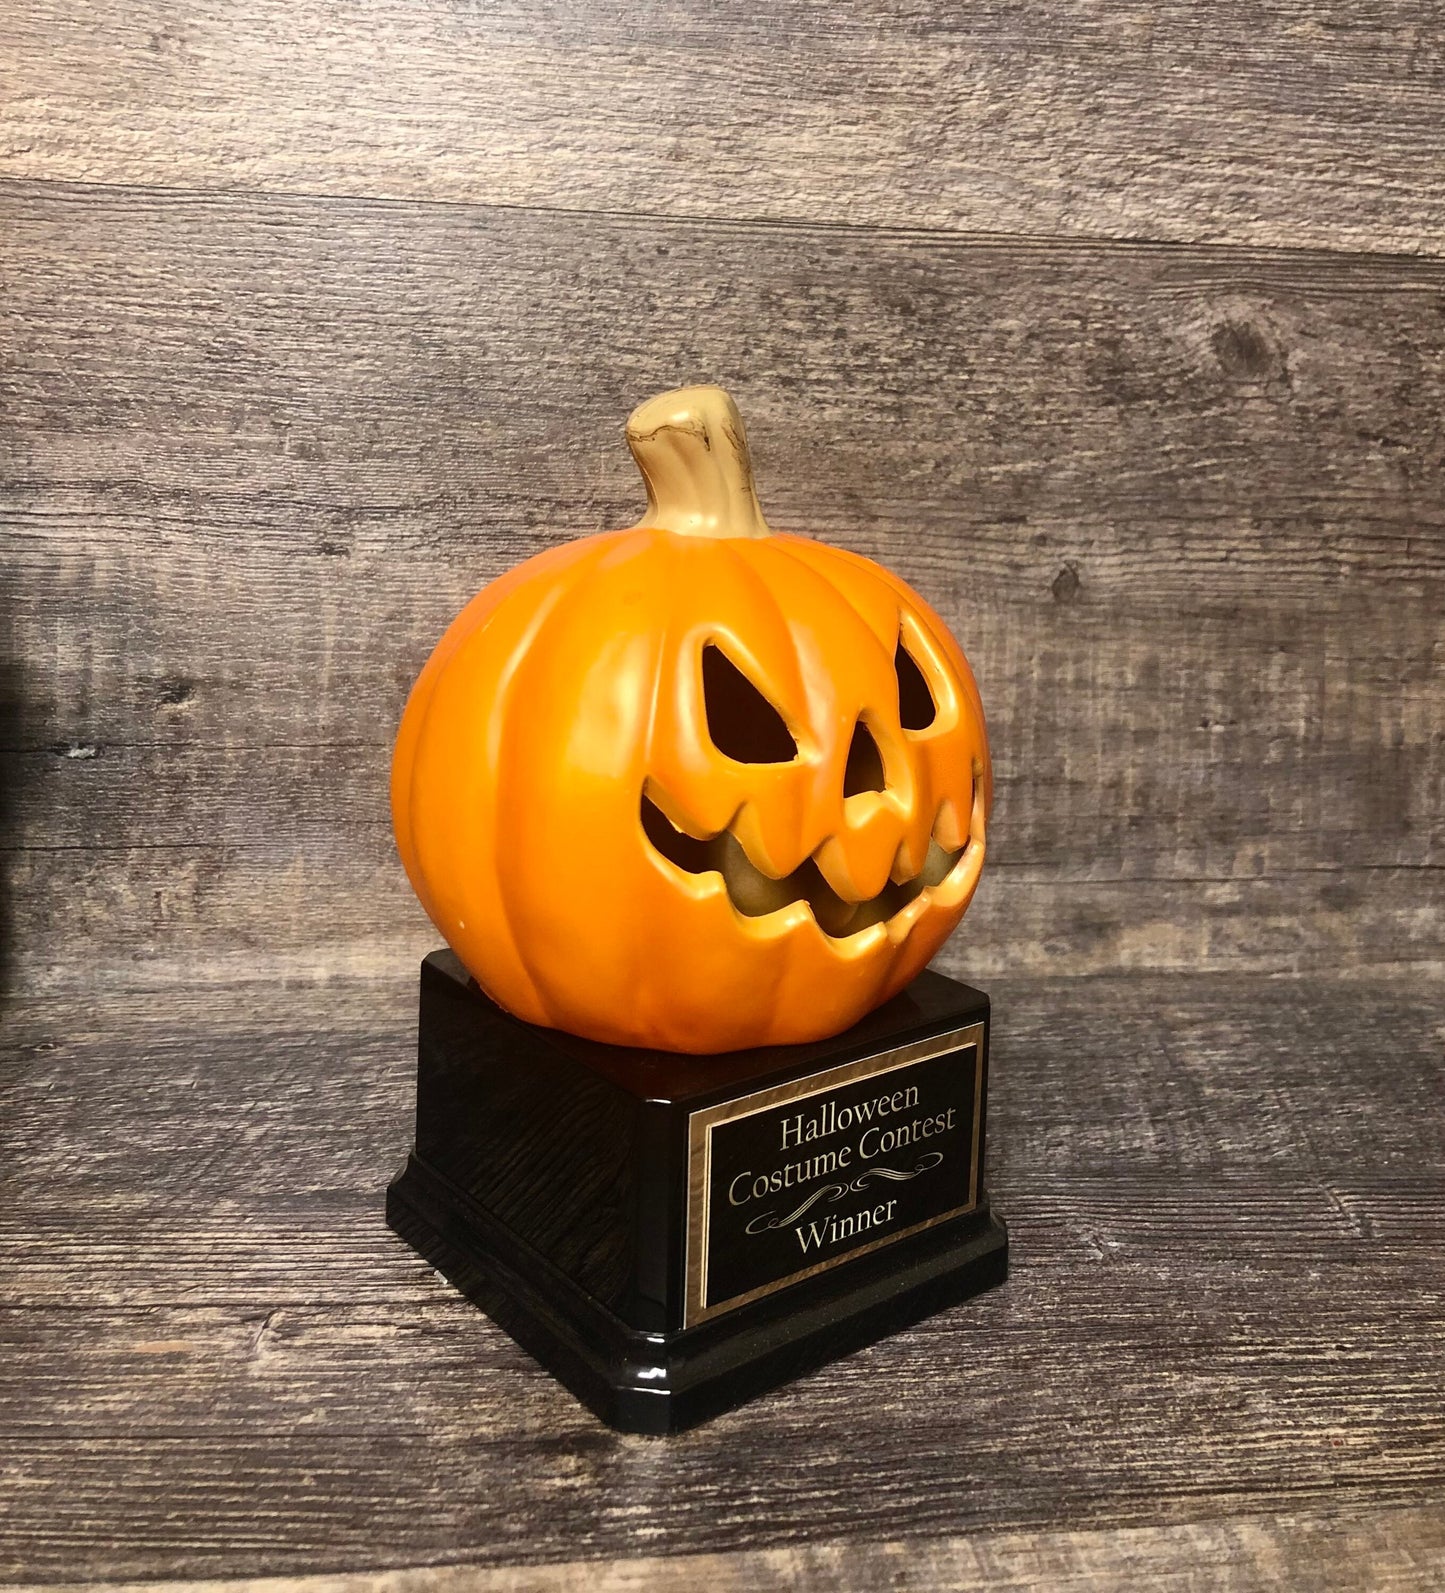 Halloween Pumpkin Trophy Carving Contest Jack O Lantern Trophy Scariest or Best Costume Contest Prize Pumpkin Decor Halloween Trophies